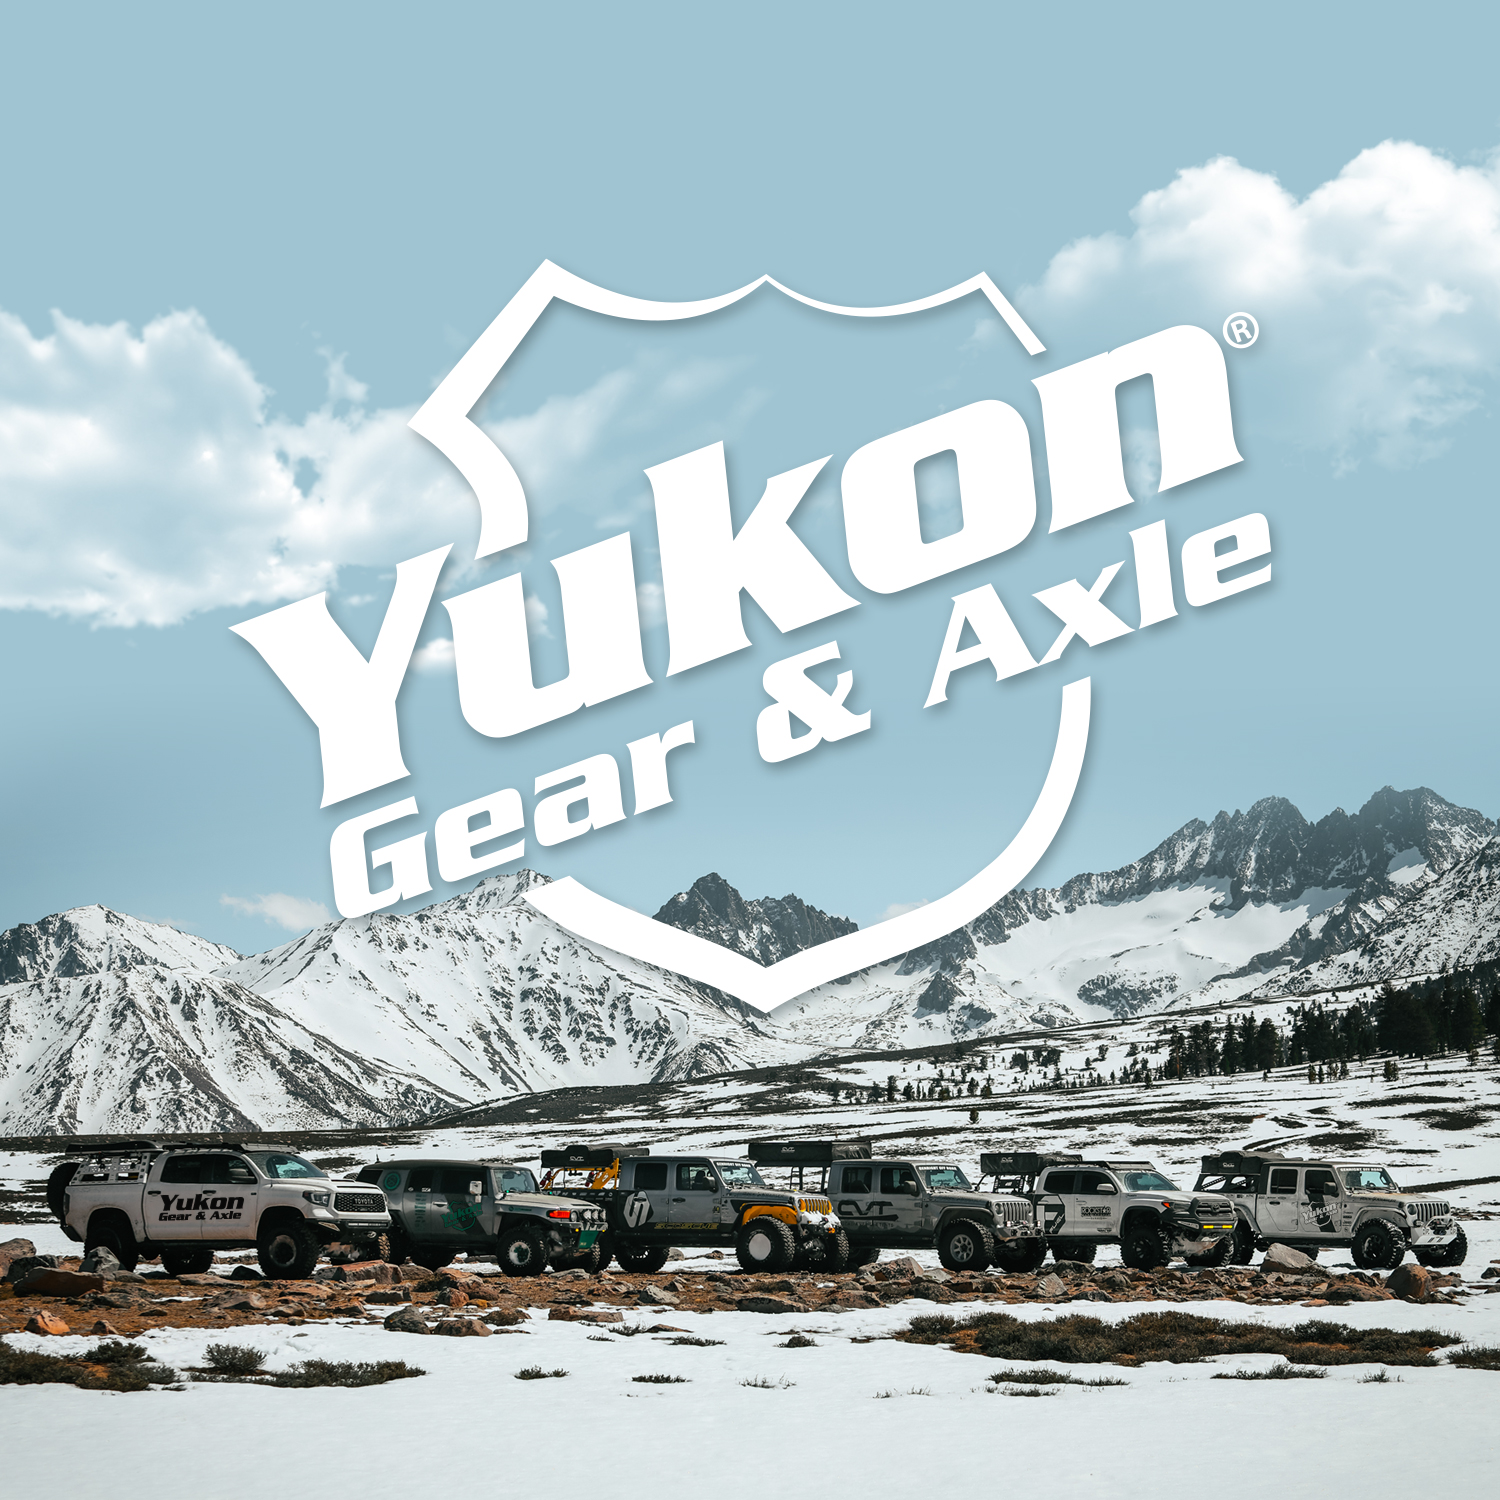 O-ring for Yukon Zip Locker Bulkhead fitting kit 